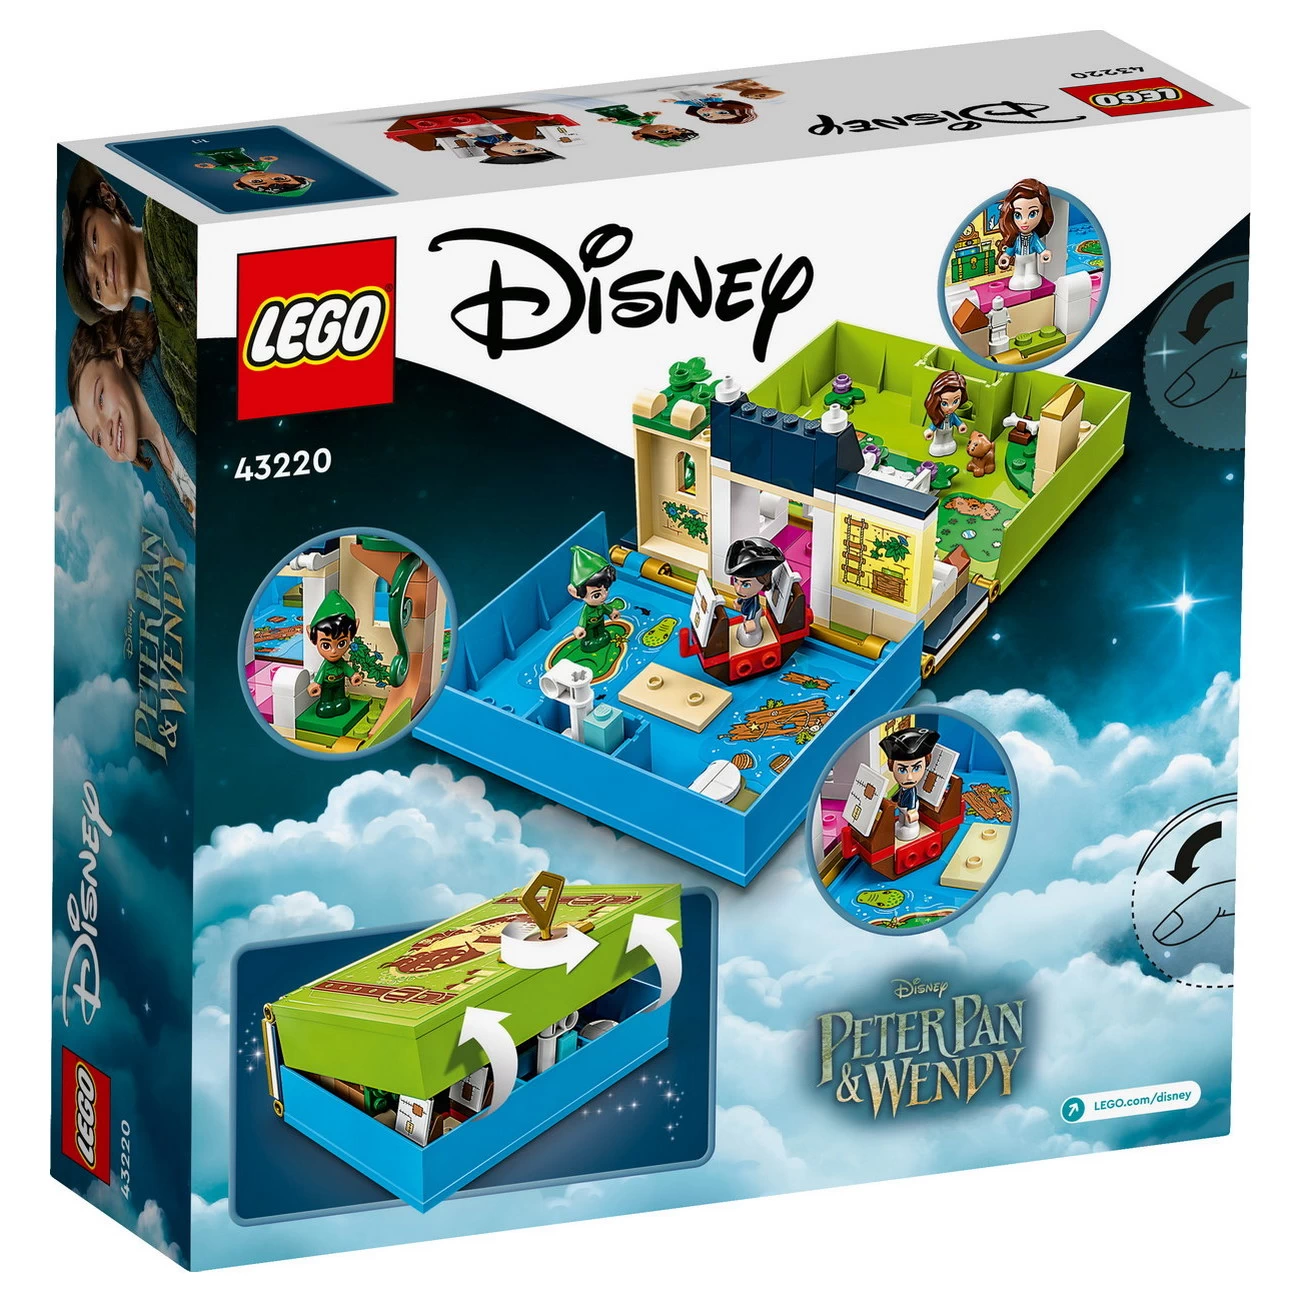 LEGO Disney Princess 43220 - Peter Pan & Wendy - Märchenbuch-Abenteuer